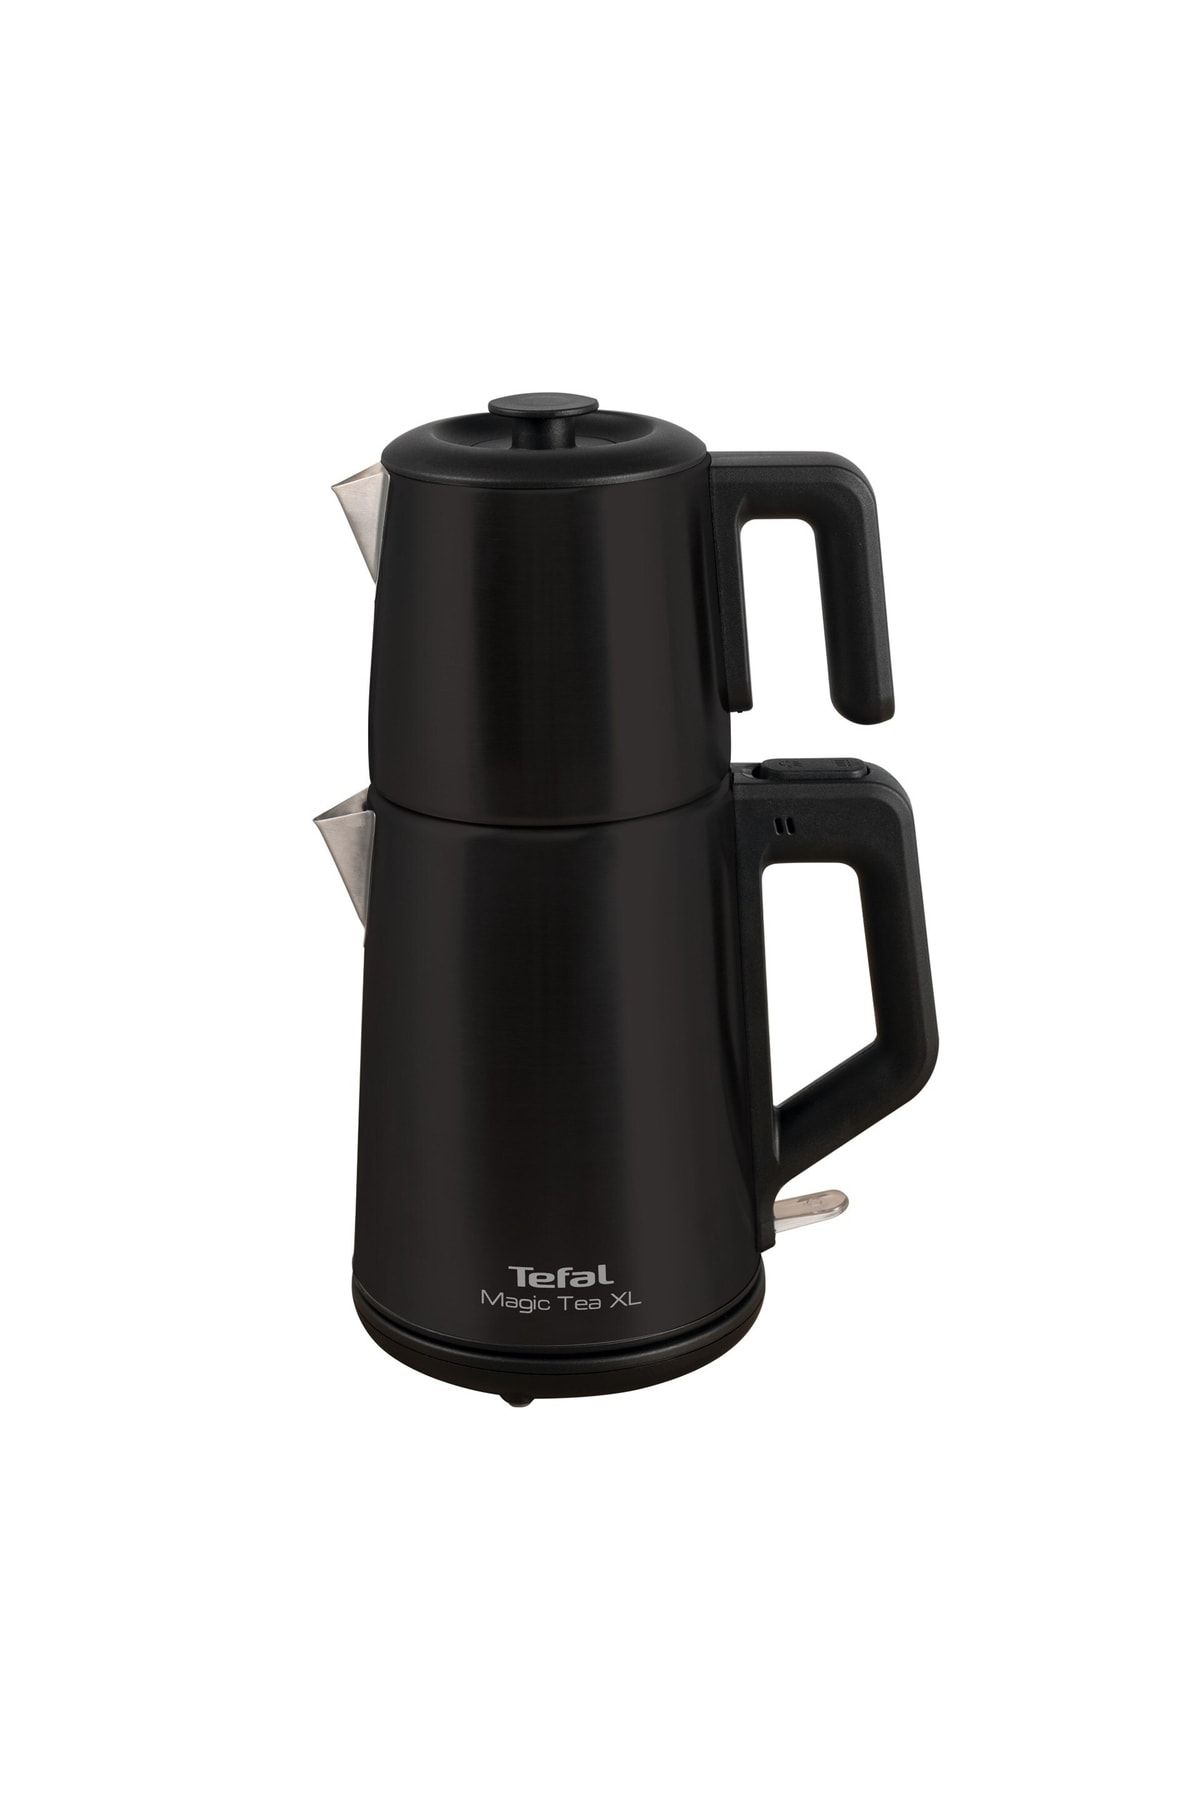 Tefal Bj5618 Magic Tea Xl Çay Makinesi Siyah Fiyatı Yorumları Trendyol